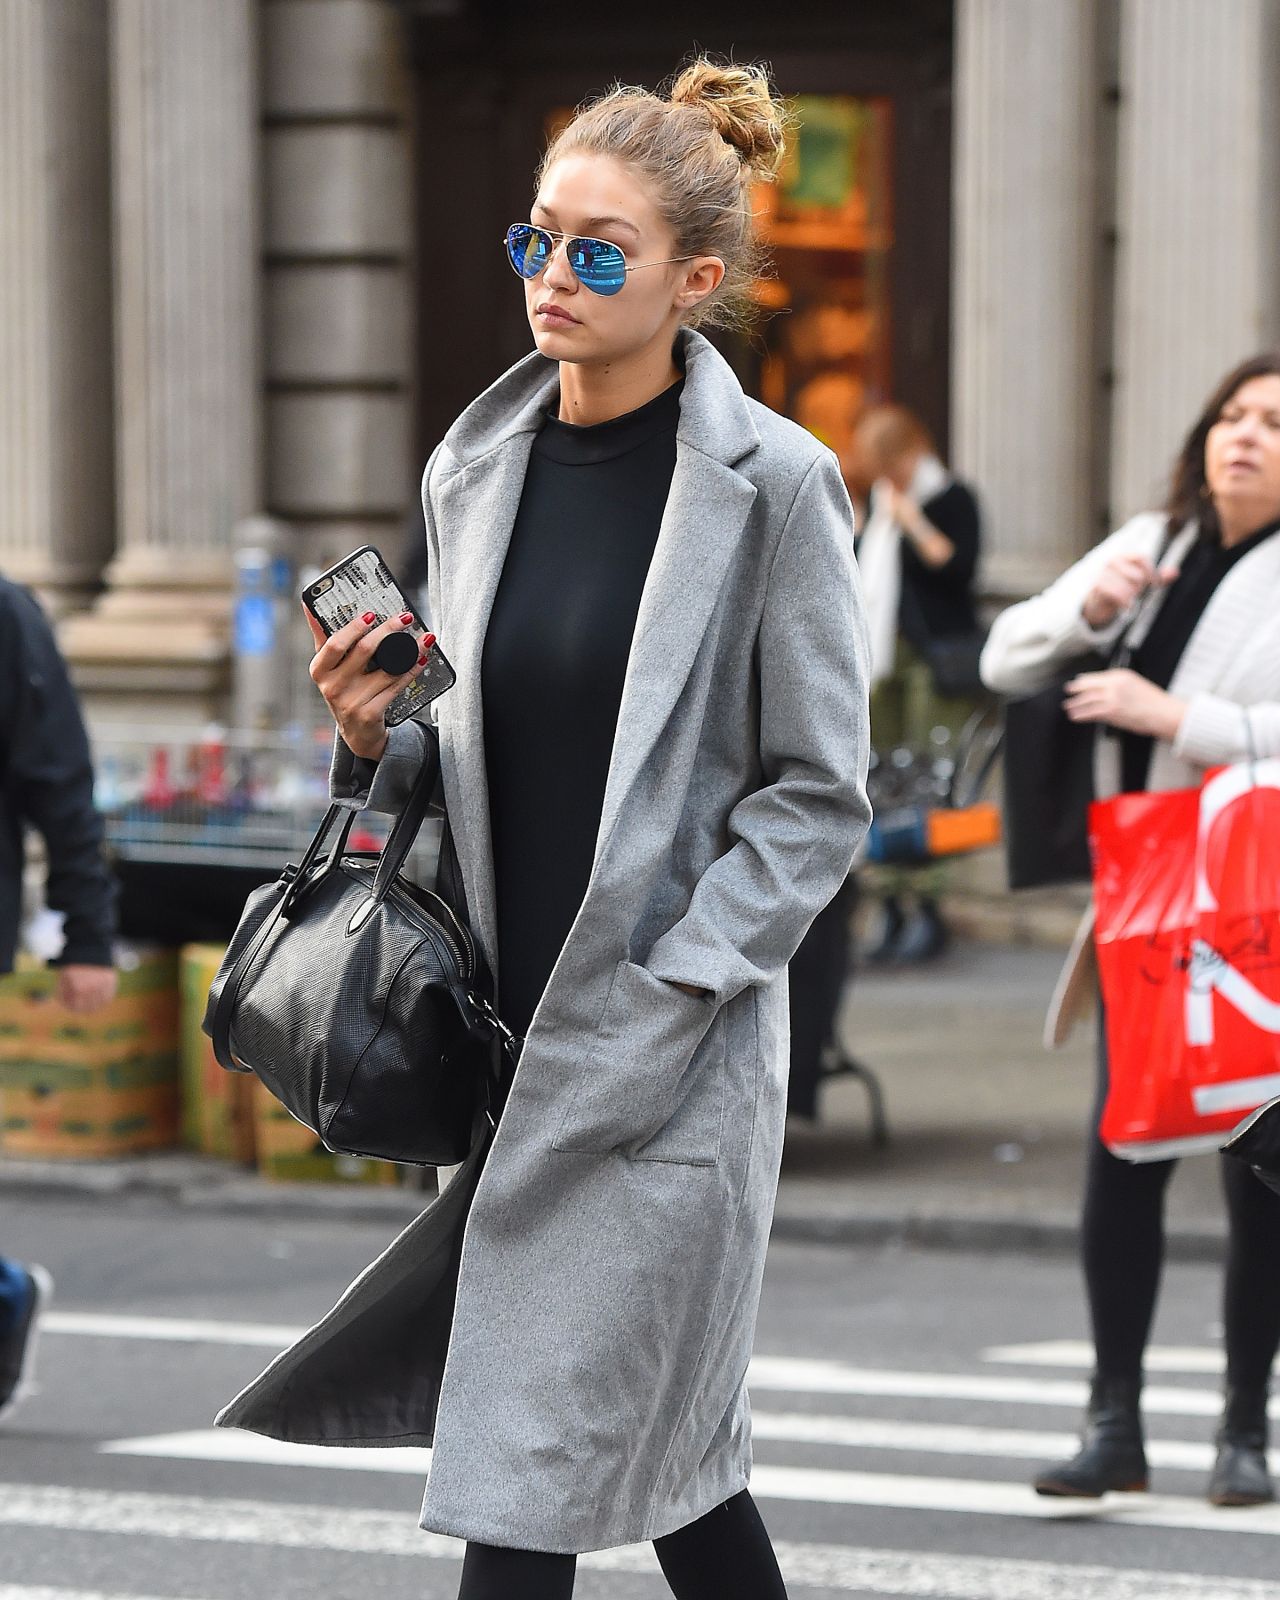 Gigi Hadid New York City November 12, 2015 – Star Style